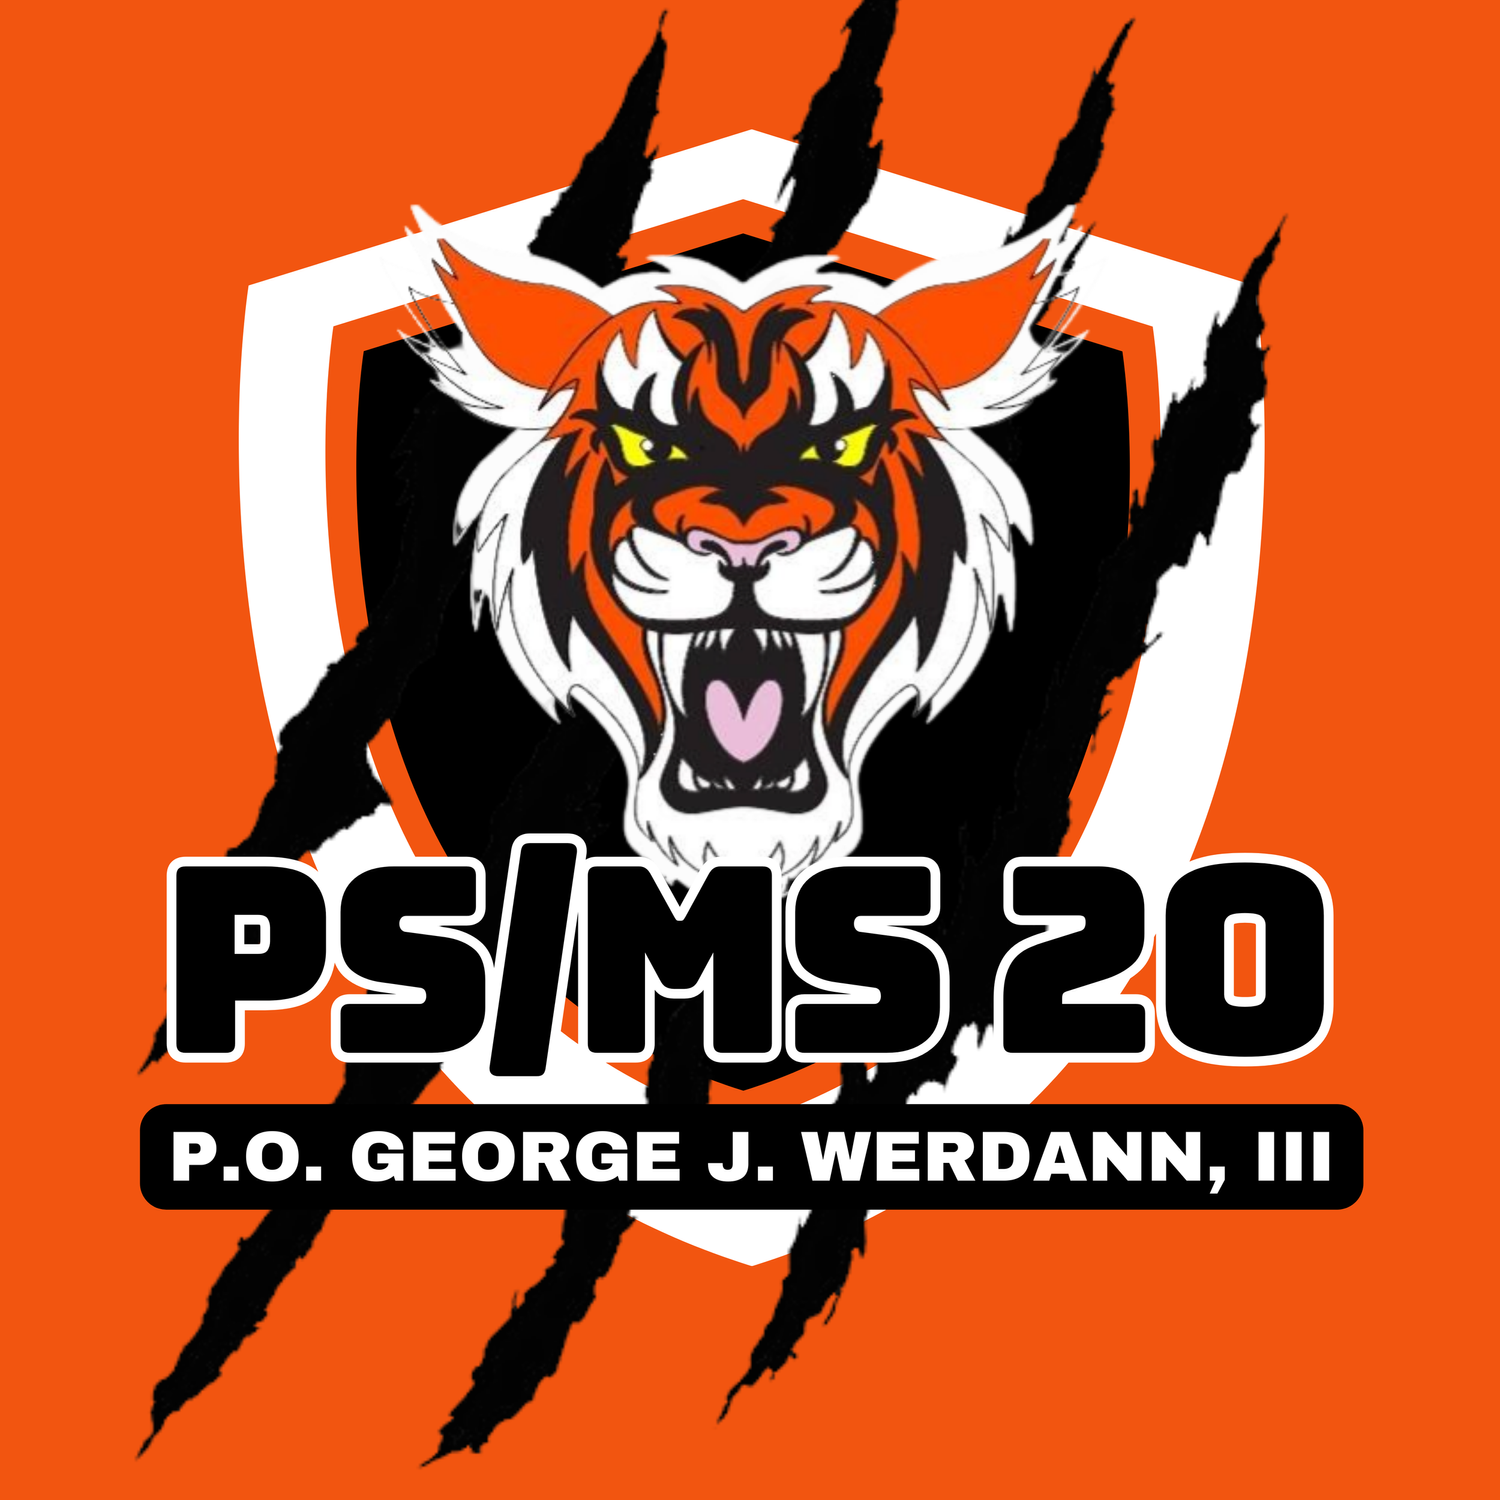 PSMS20